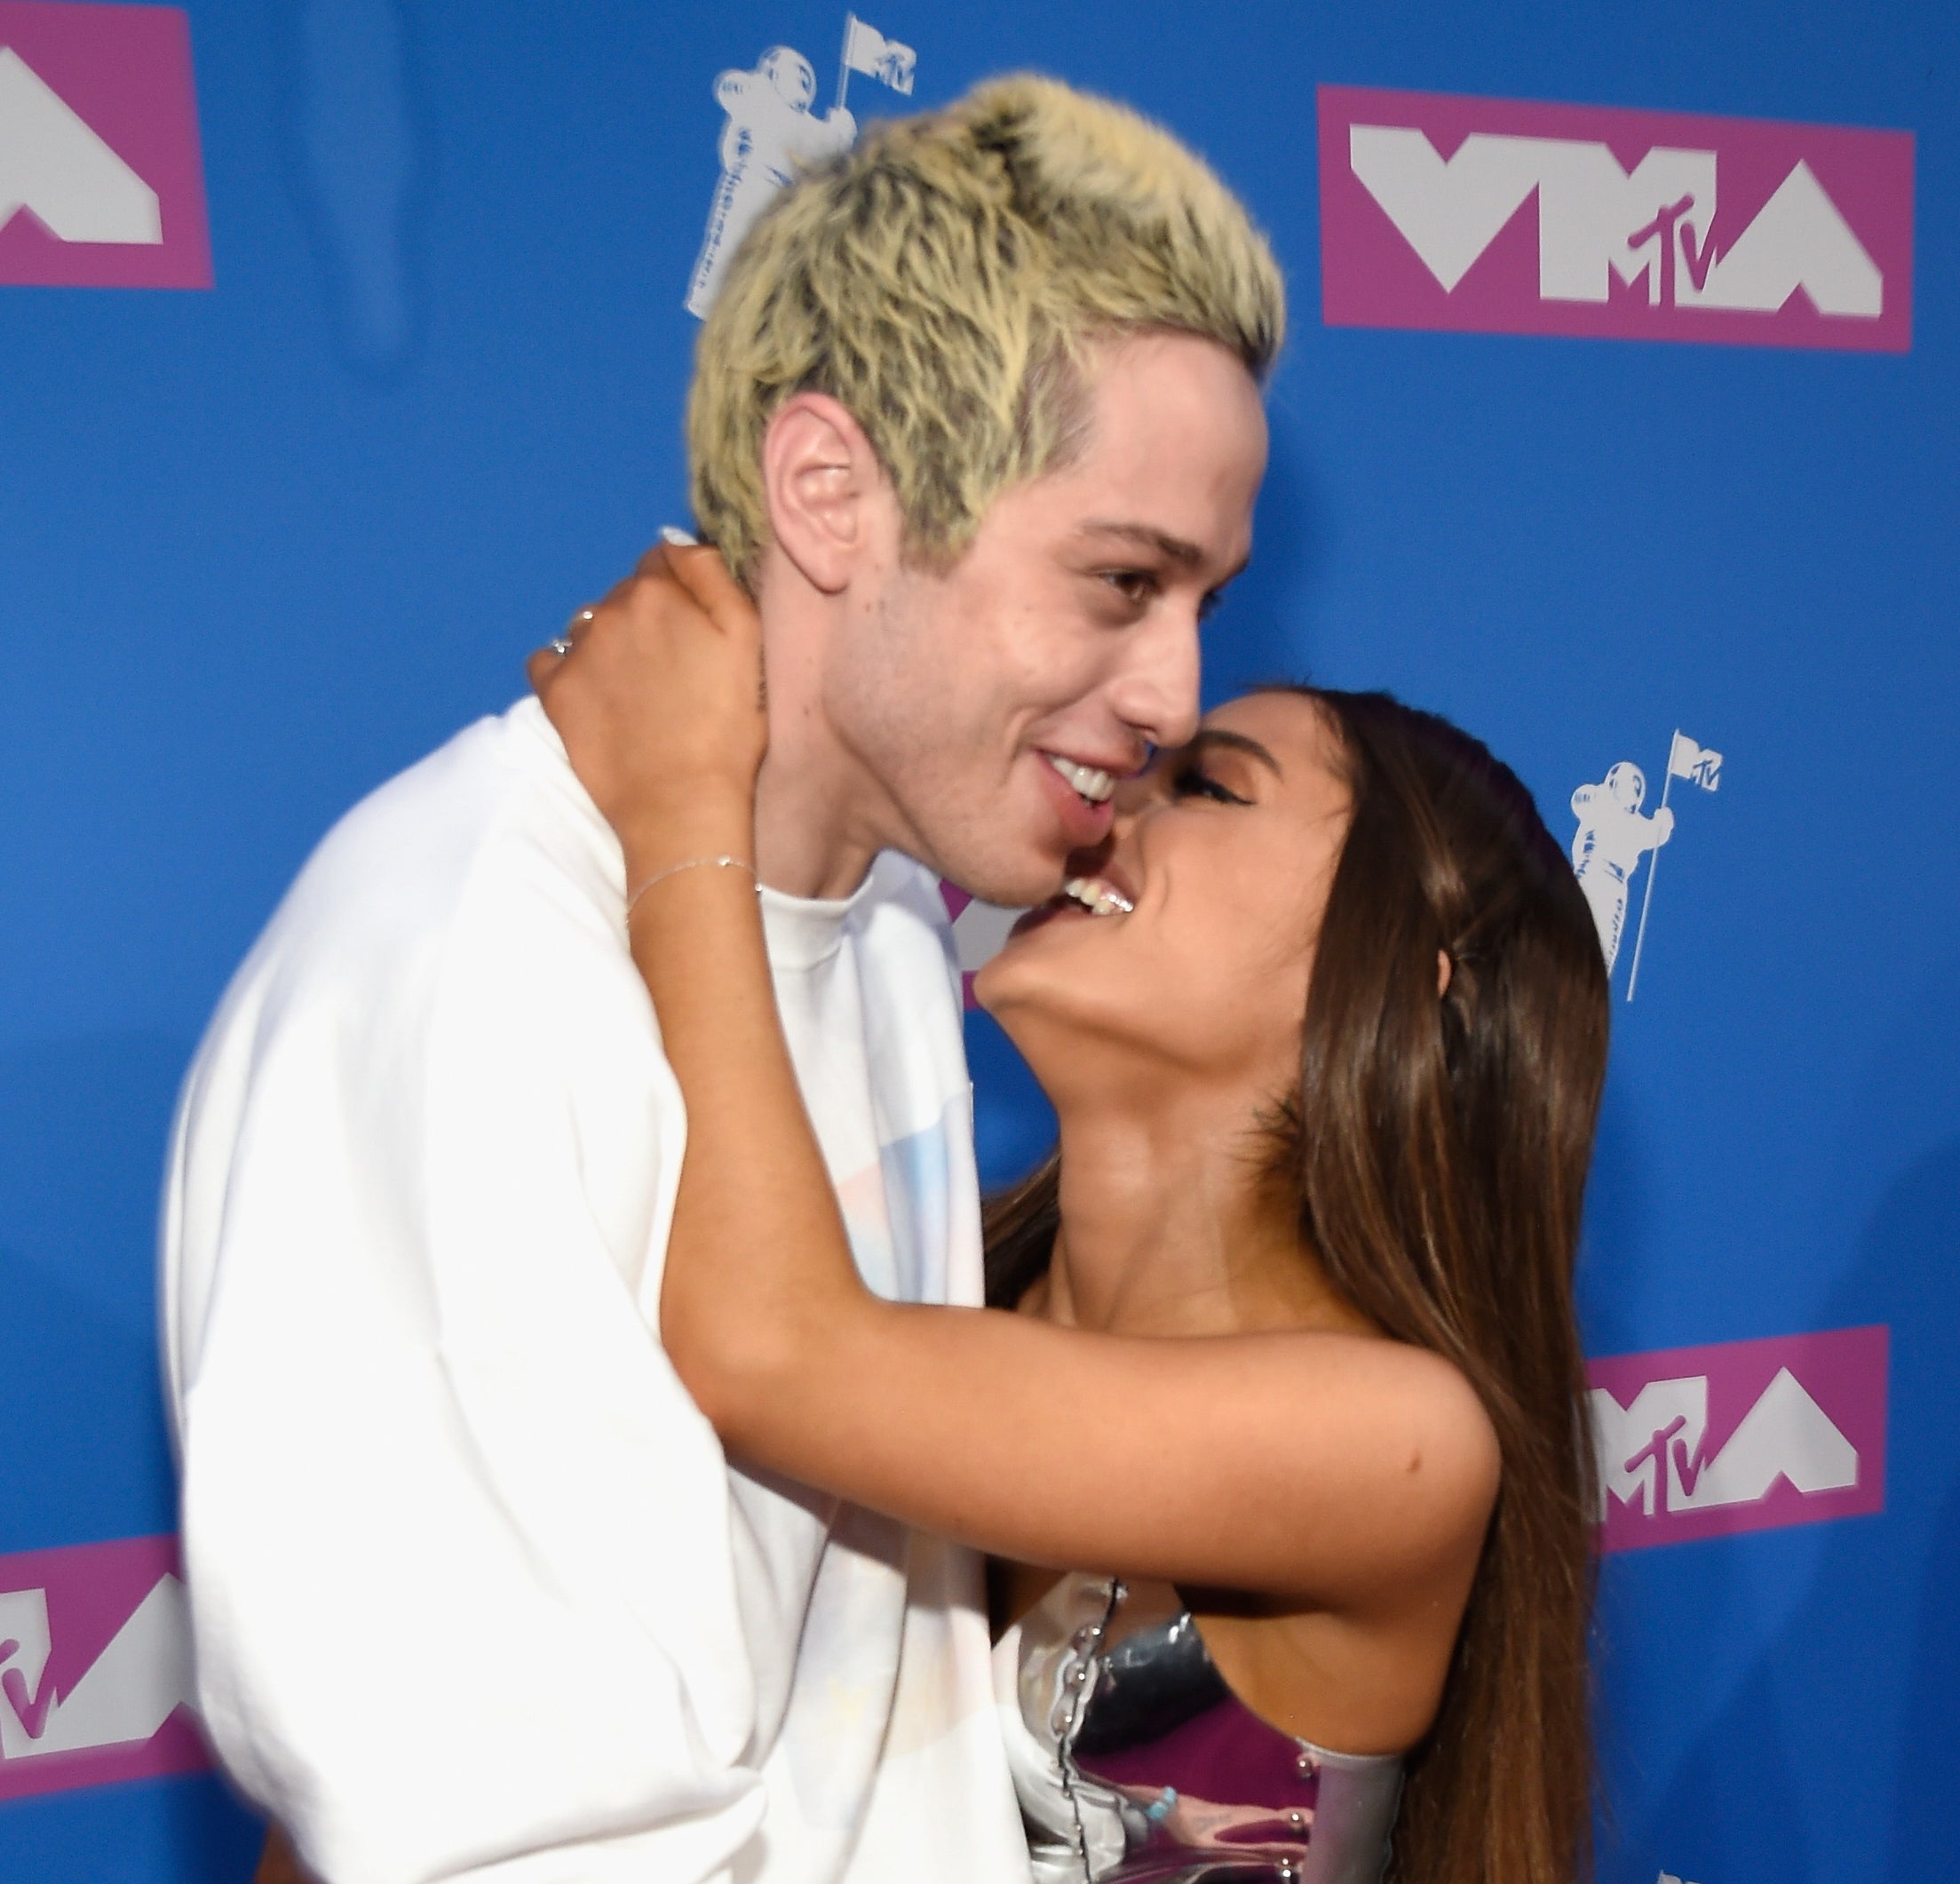 Pete Davidson and Ariana Grande share a hug at the VMAs